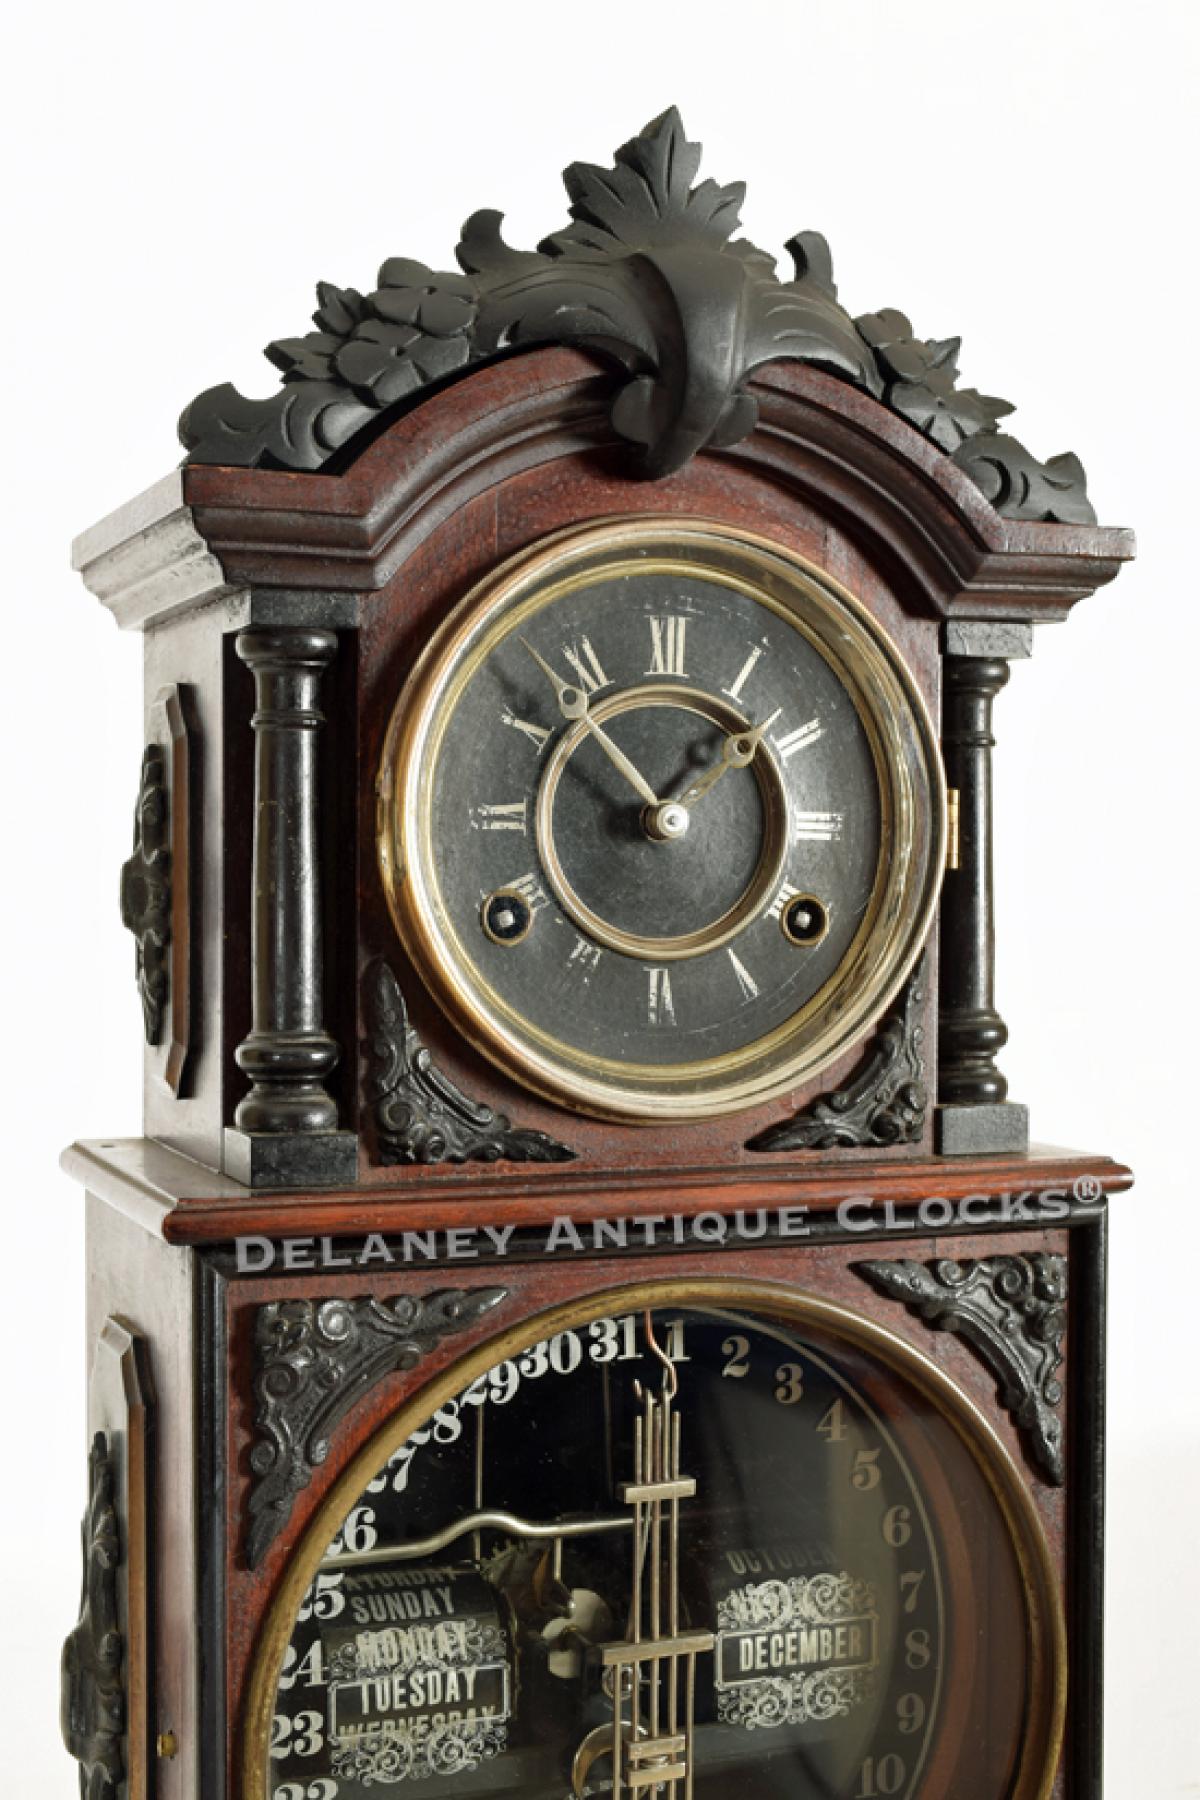 Ithaca Calendar Clock Co. Model Number 3.5 Parlor. Shelf clock. Time